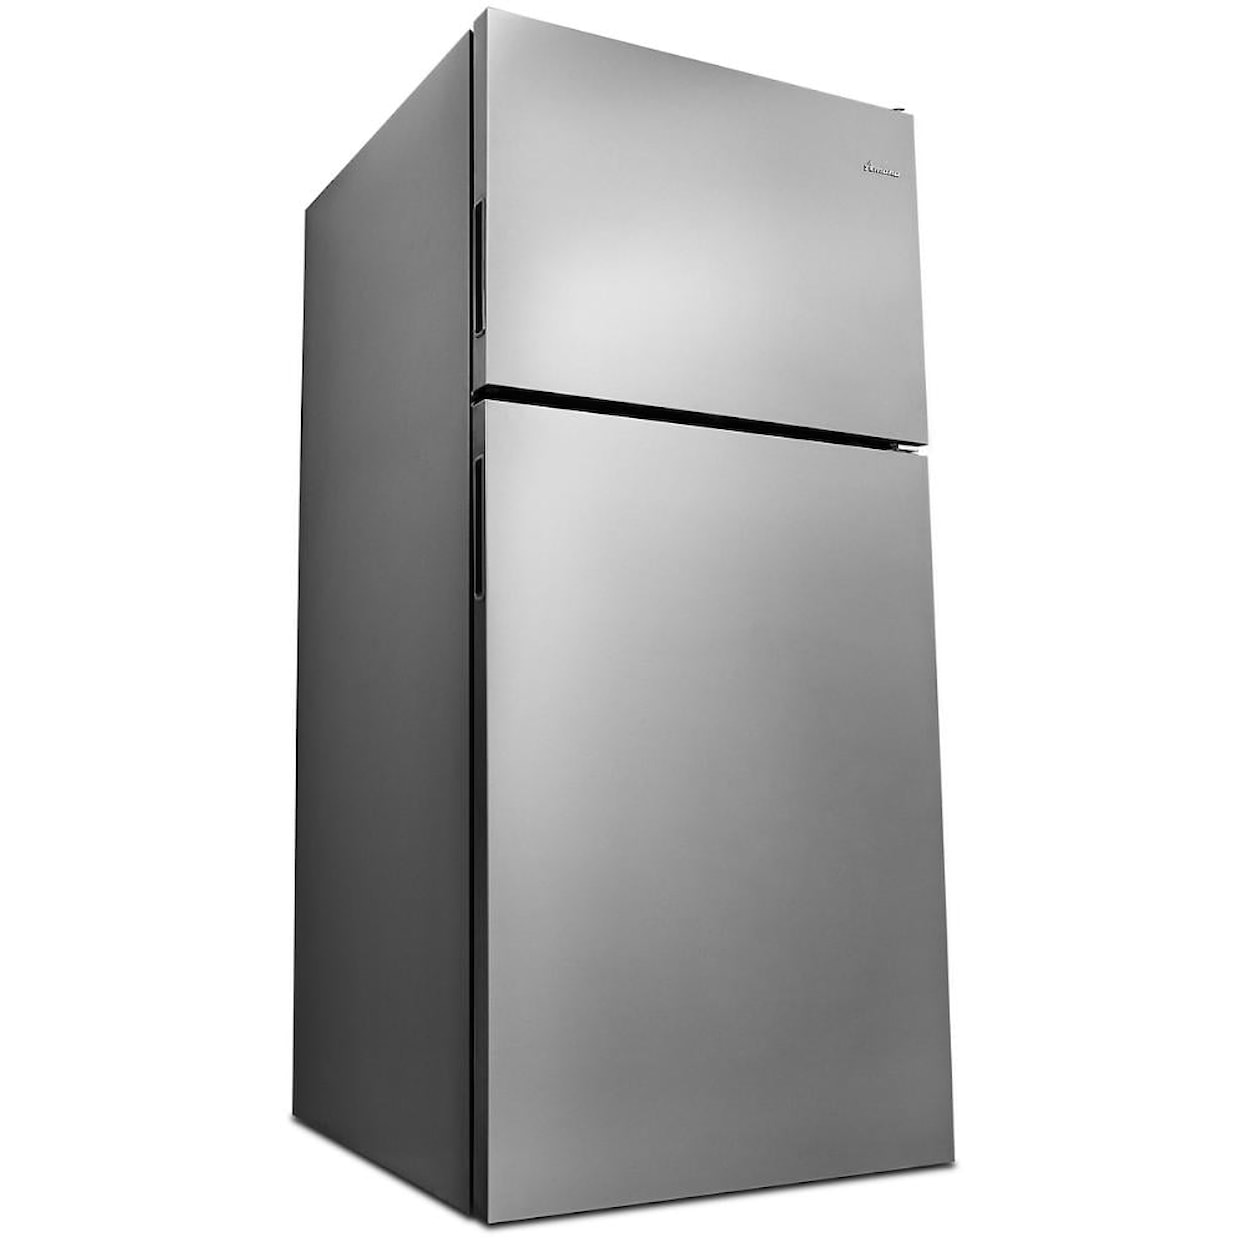 Amana Refrigerators Refrigerator